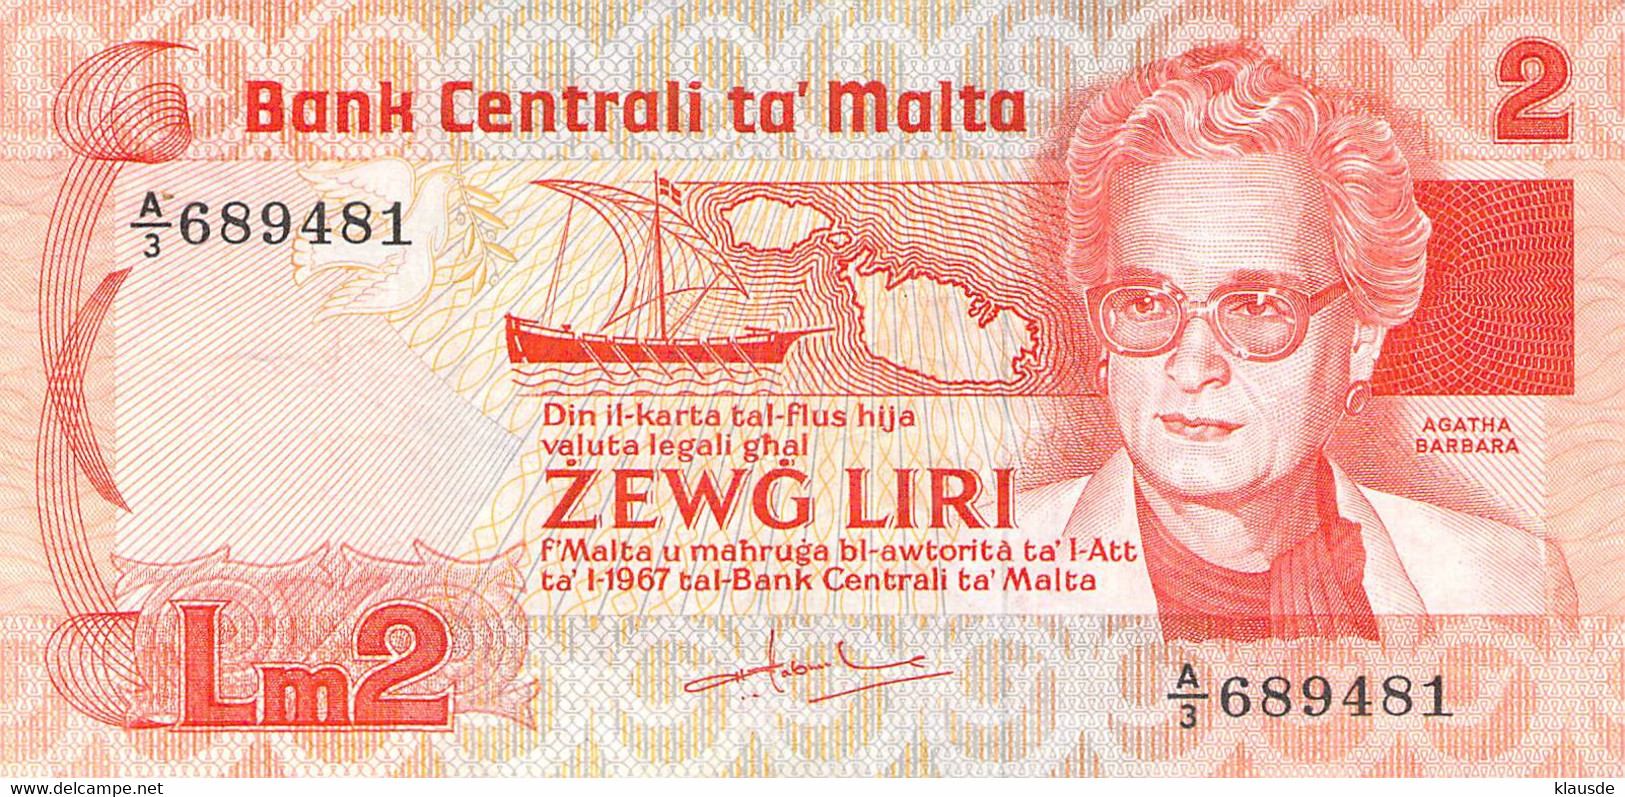 2 Maltese Liri Banknote 1967 (Agatha Barbara) VG/G III - Malta